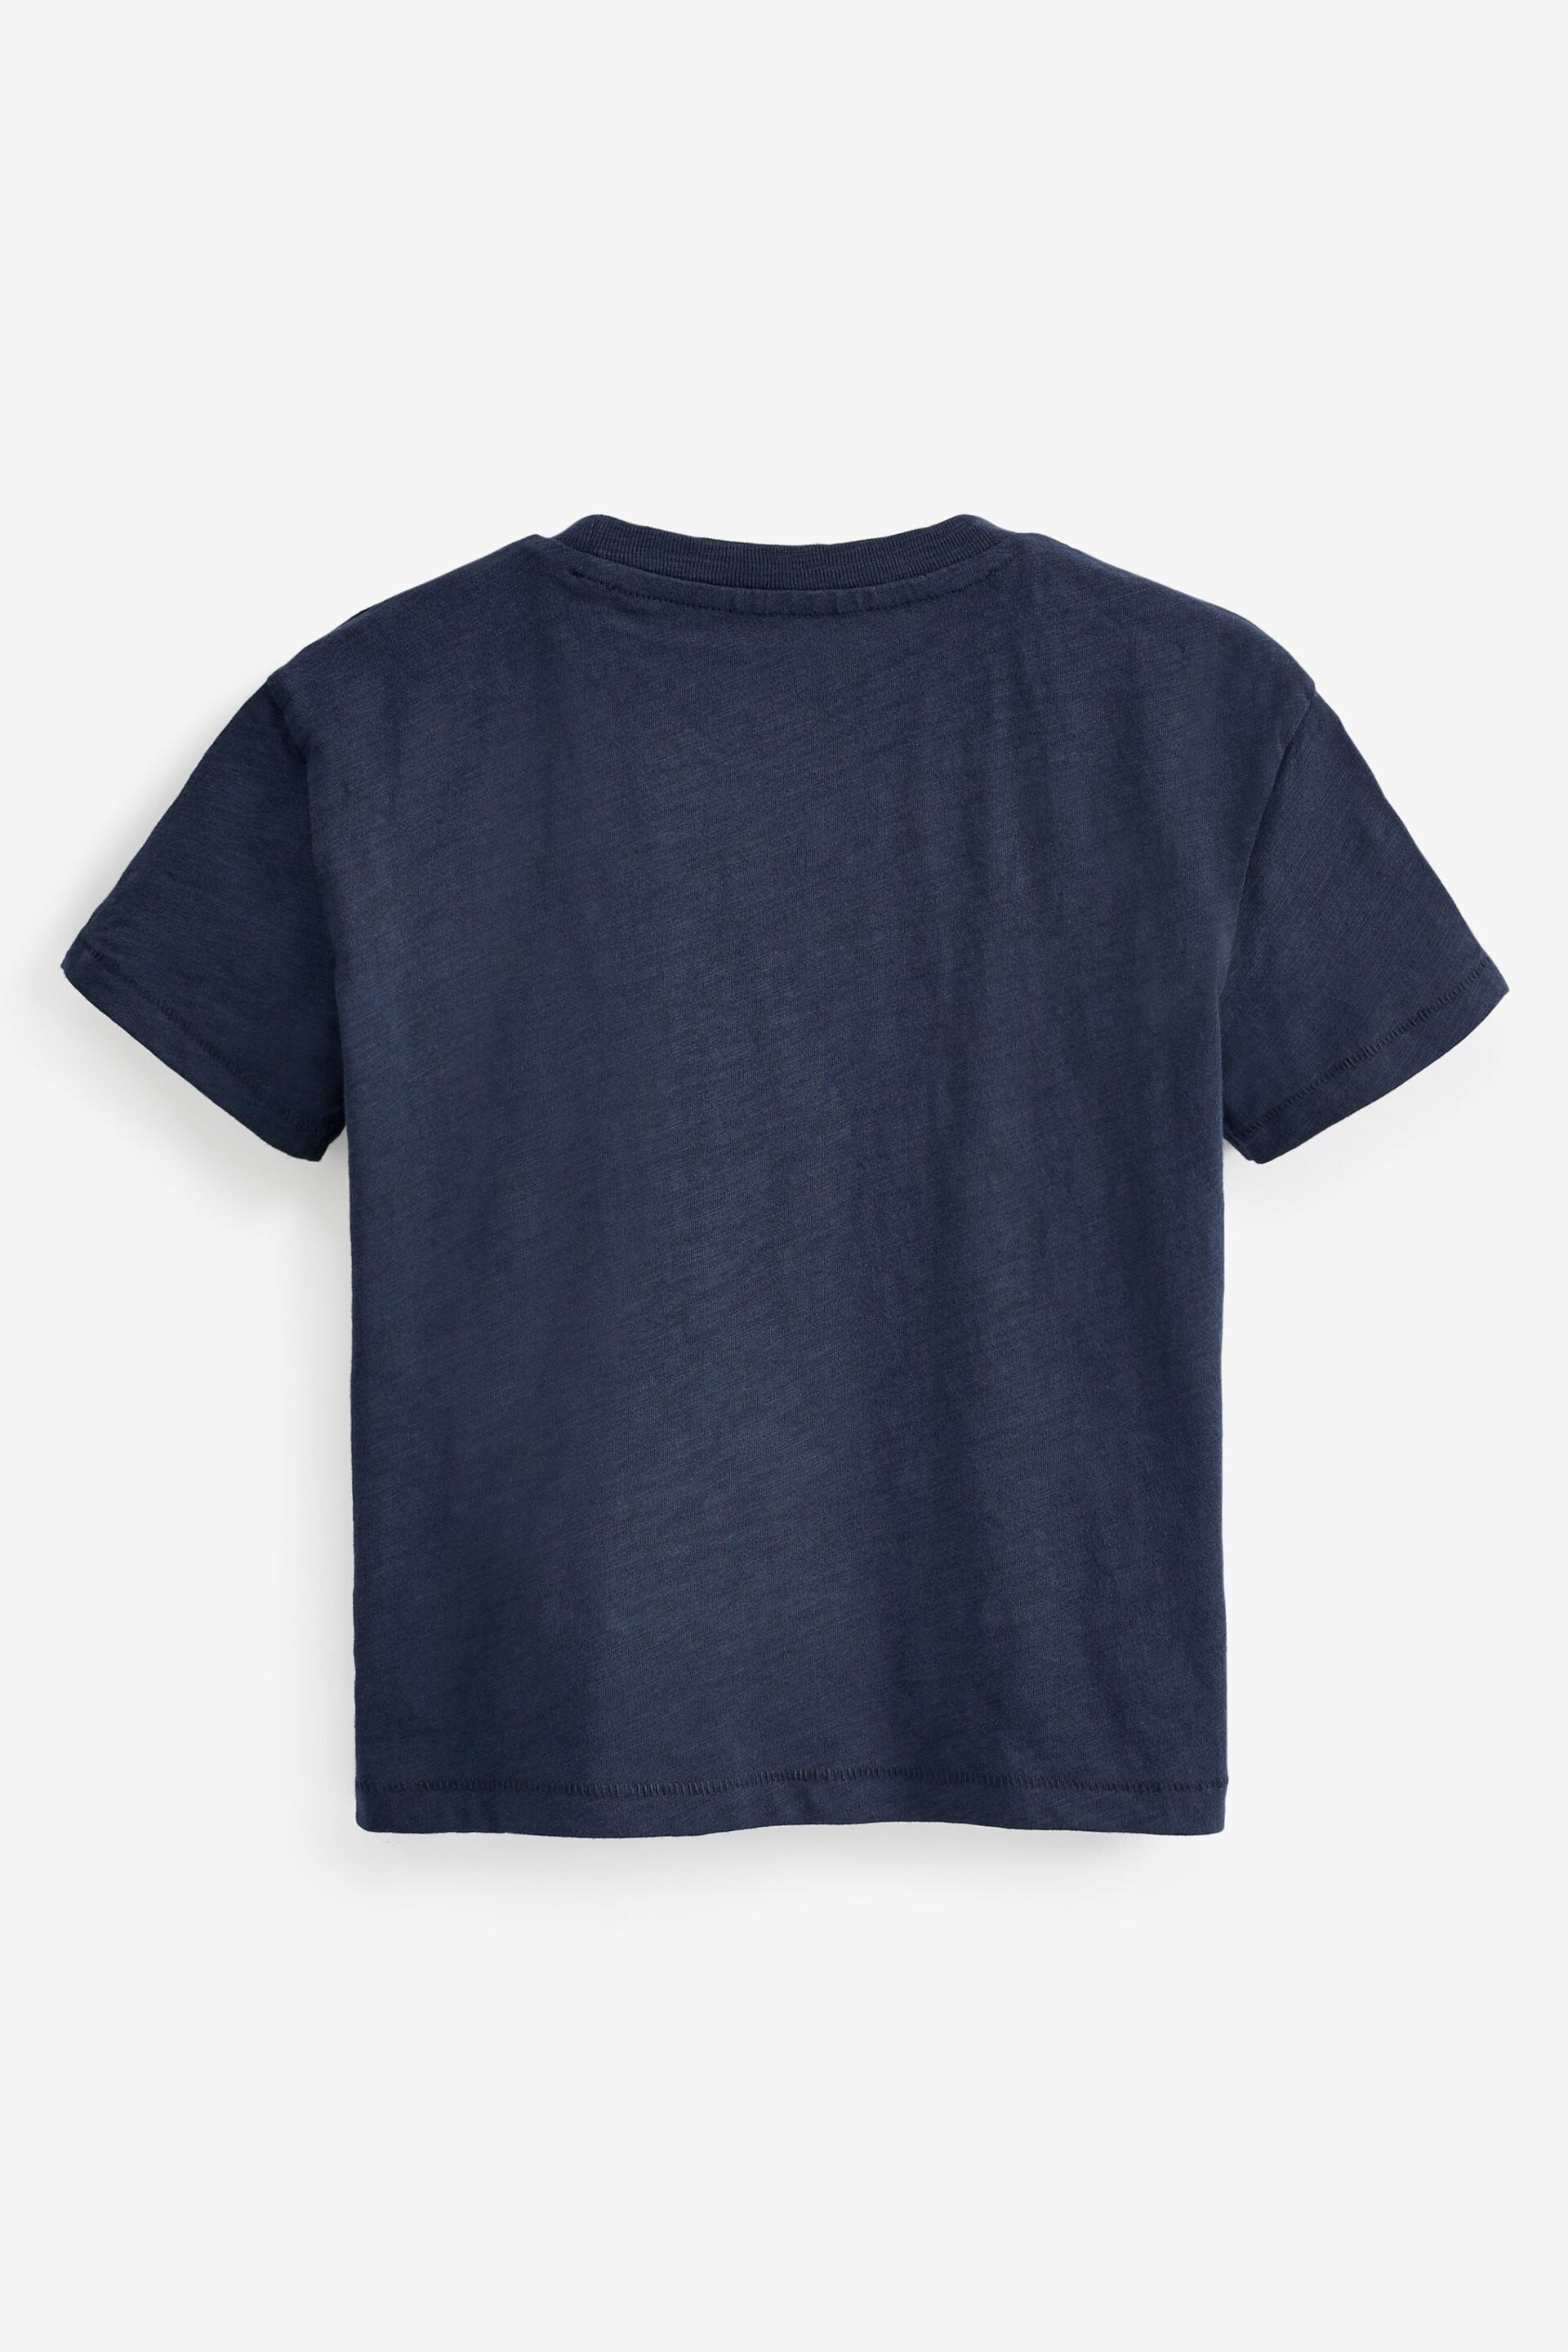 Gap Navy Blue Pocket Short Sleeve Crew Neck T-Shirt (4-13yrs) - Image 2 of 3